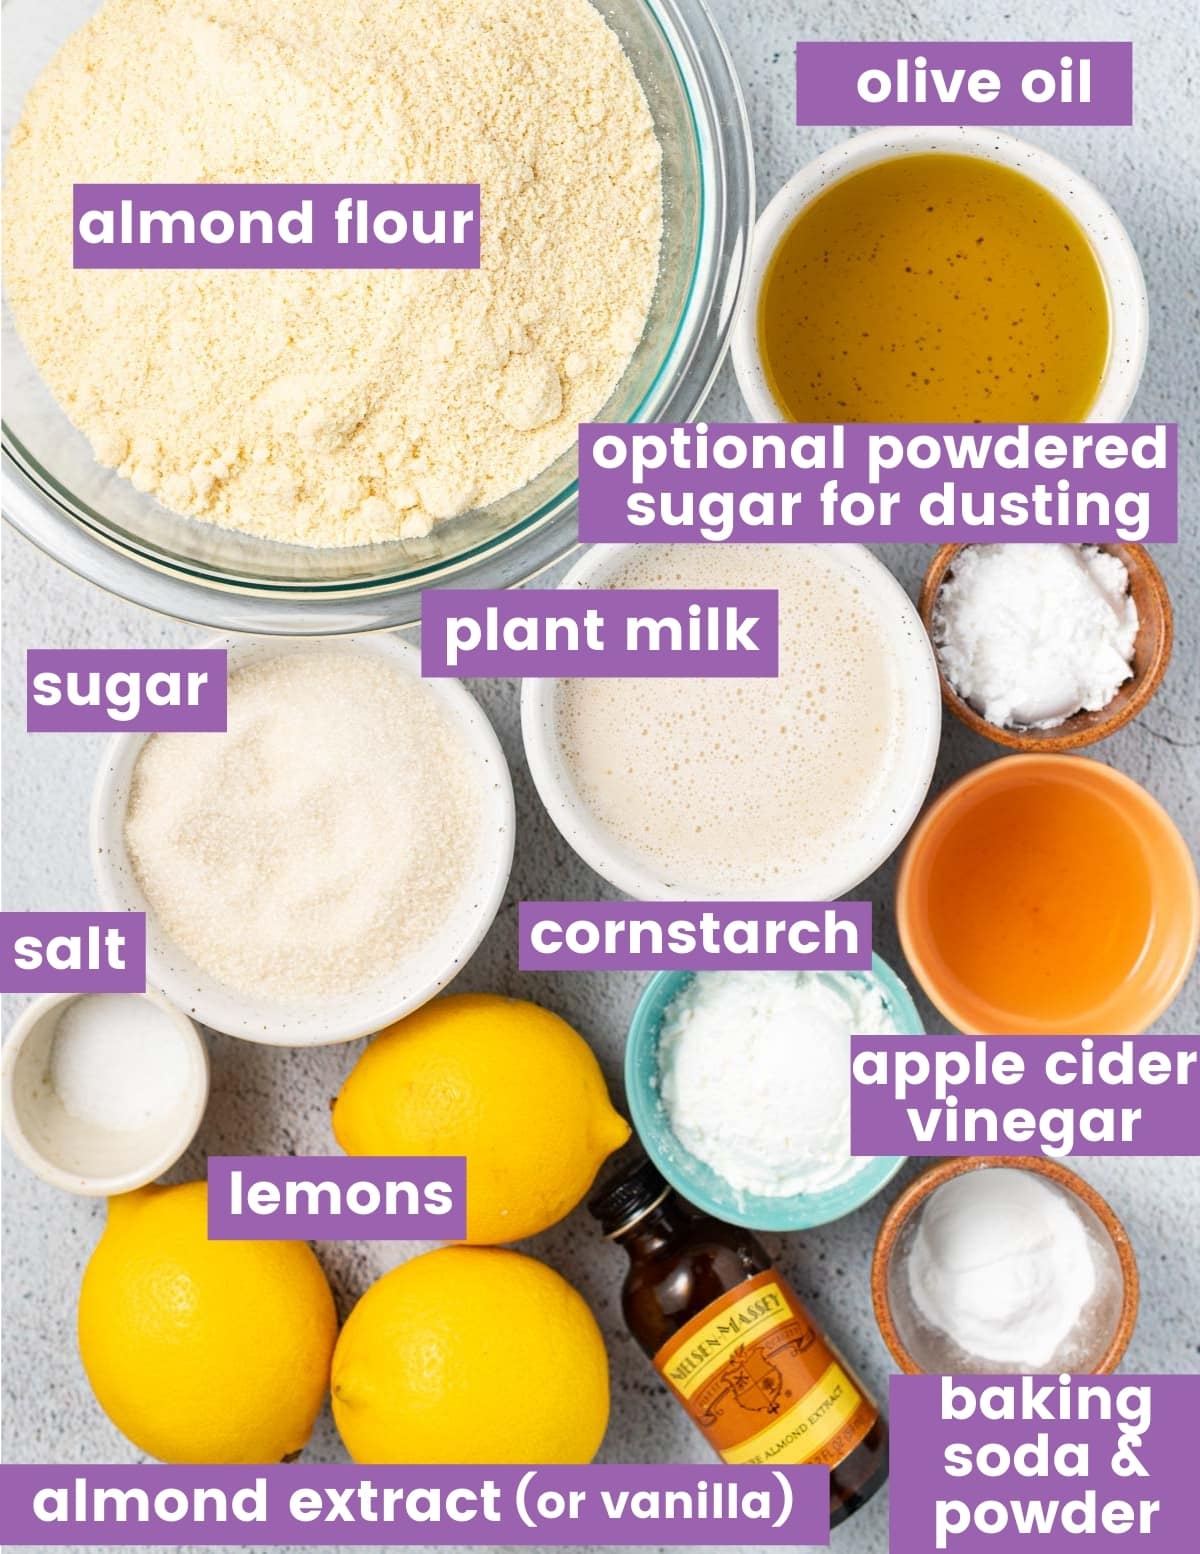 ingredients for vegan almond cake as per the written ingredient list